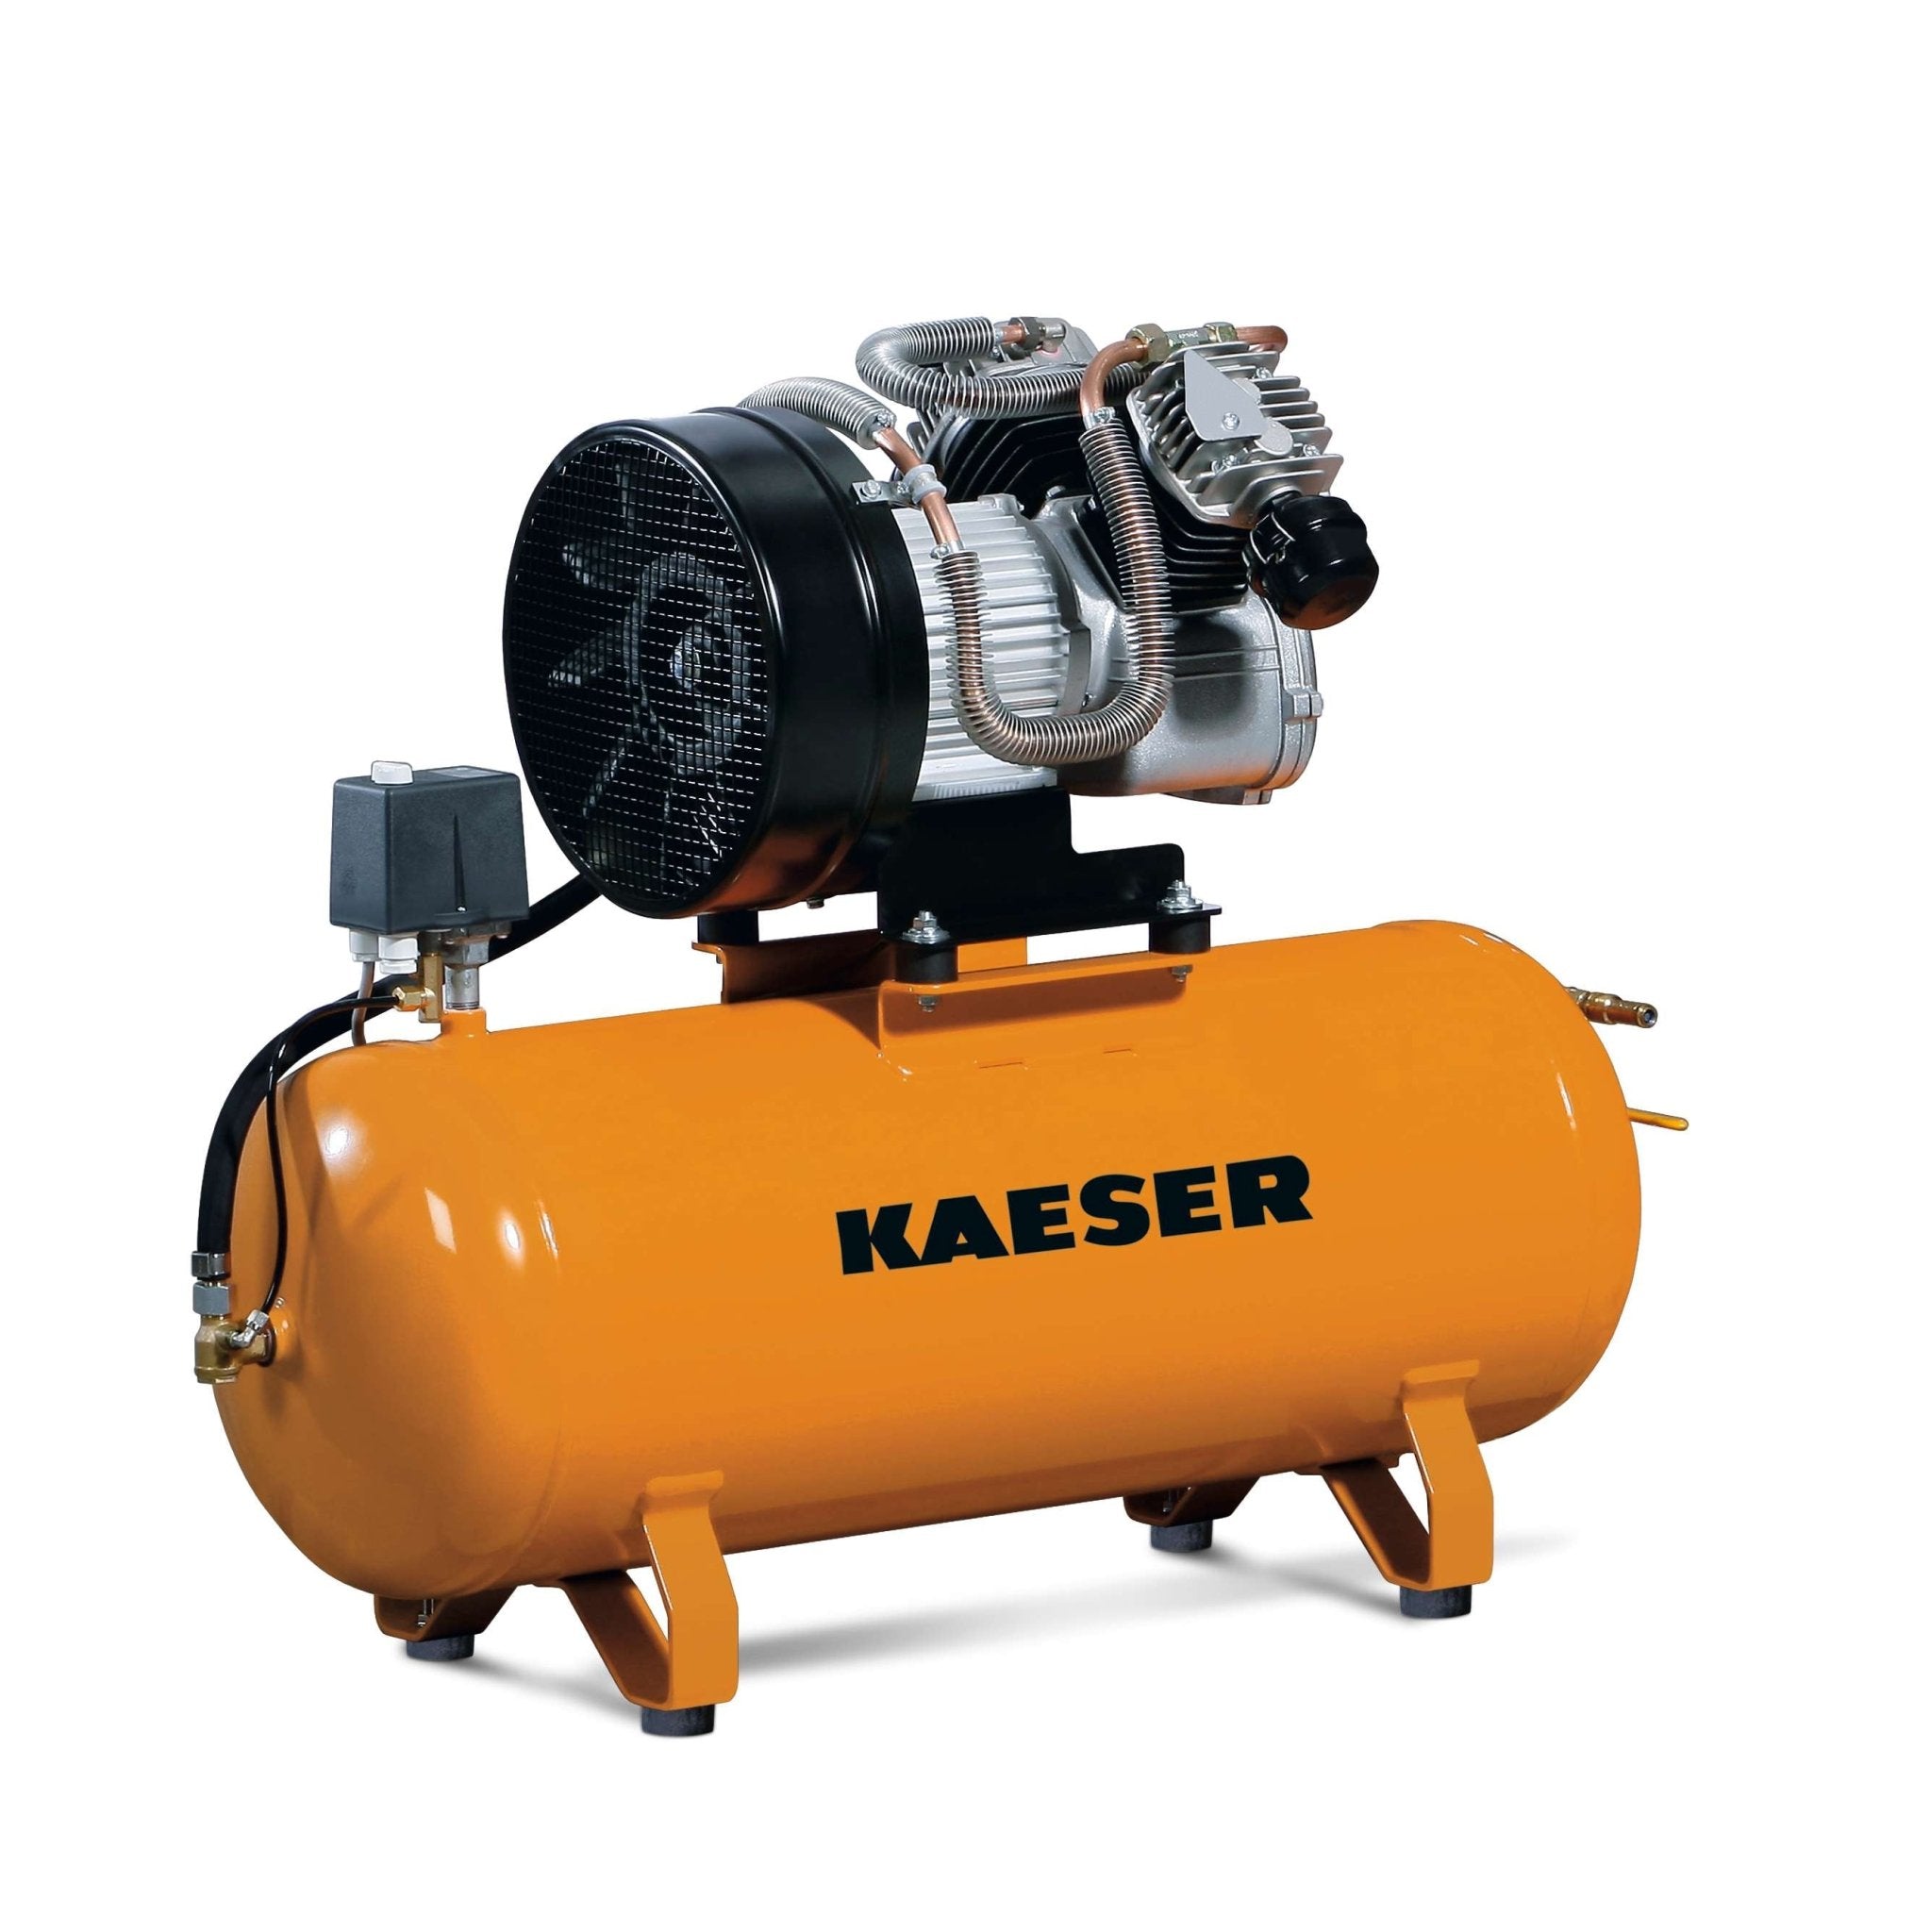 Kaeser piston compressor EPC 440-100